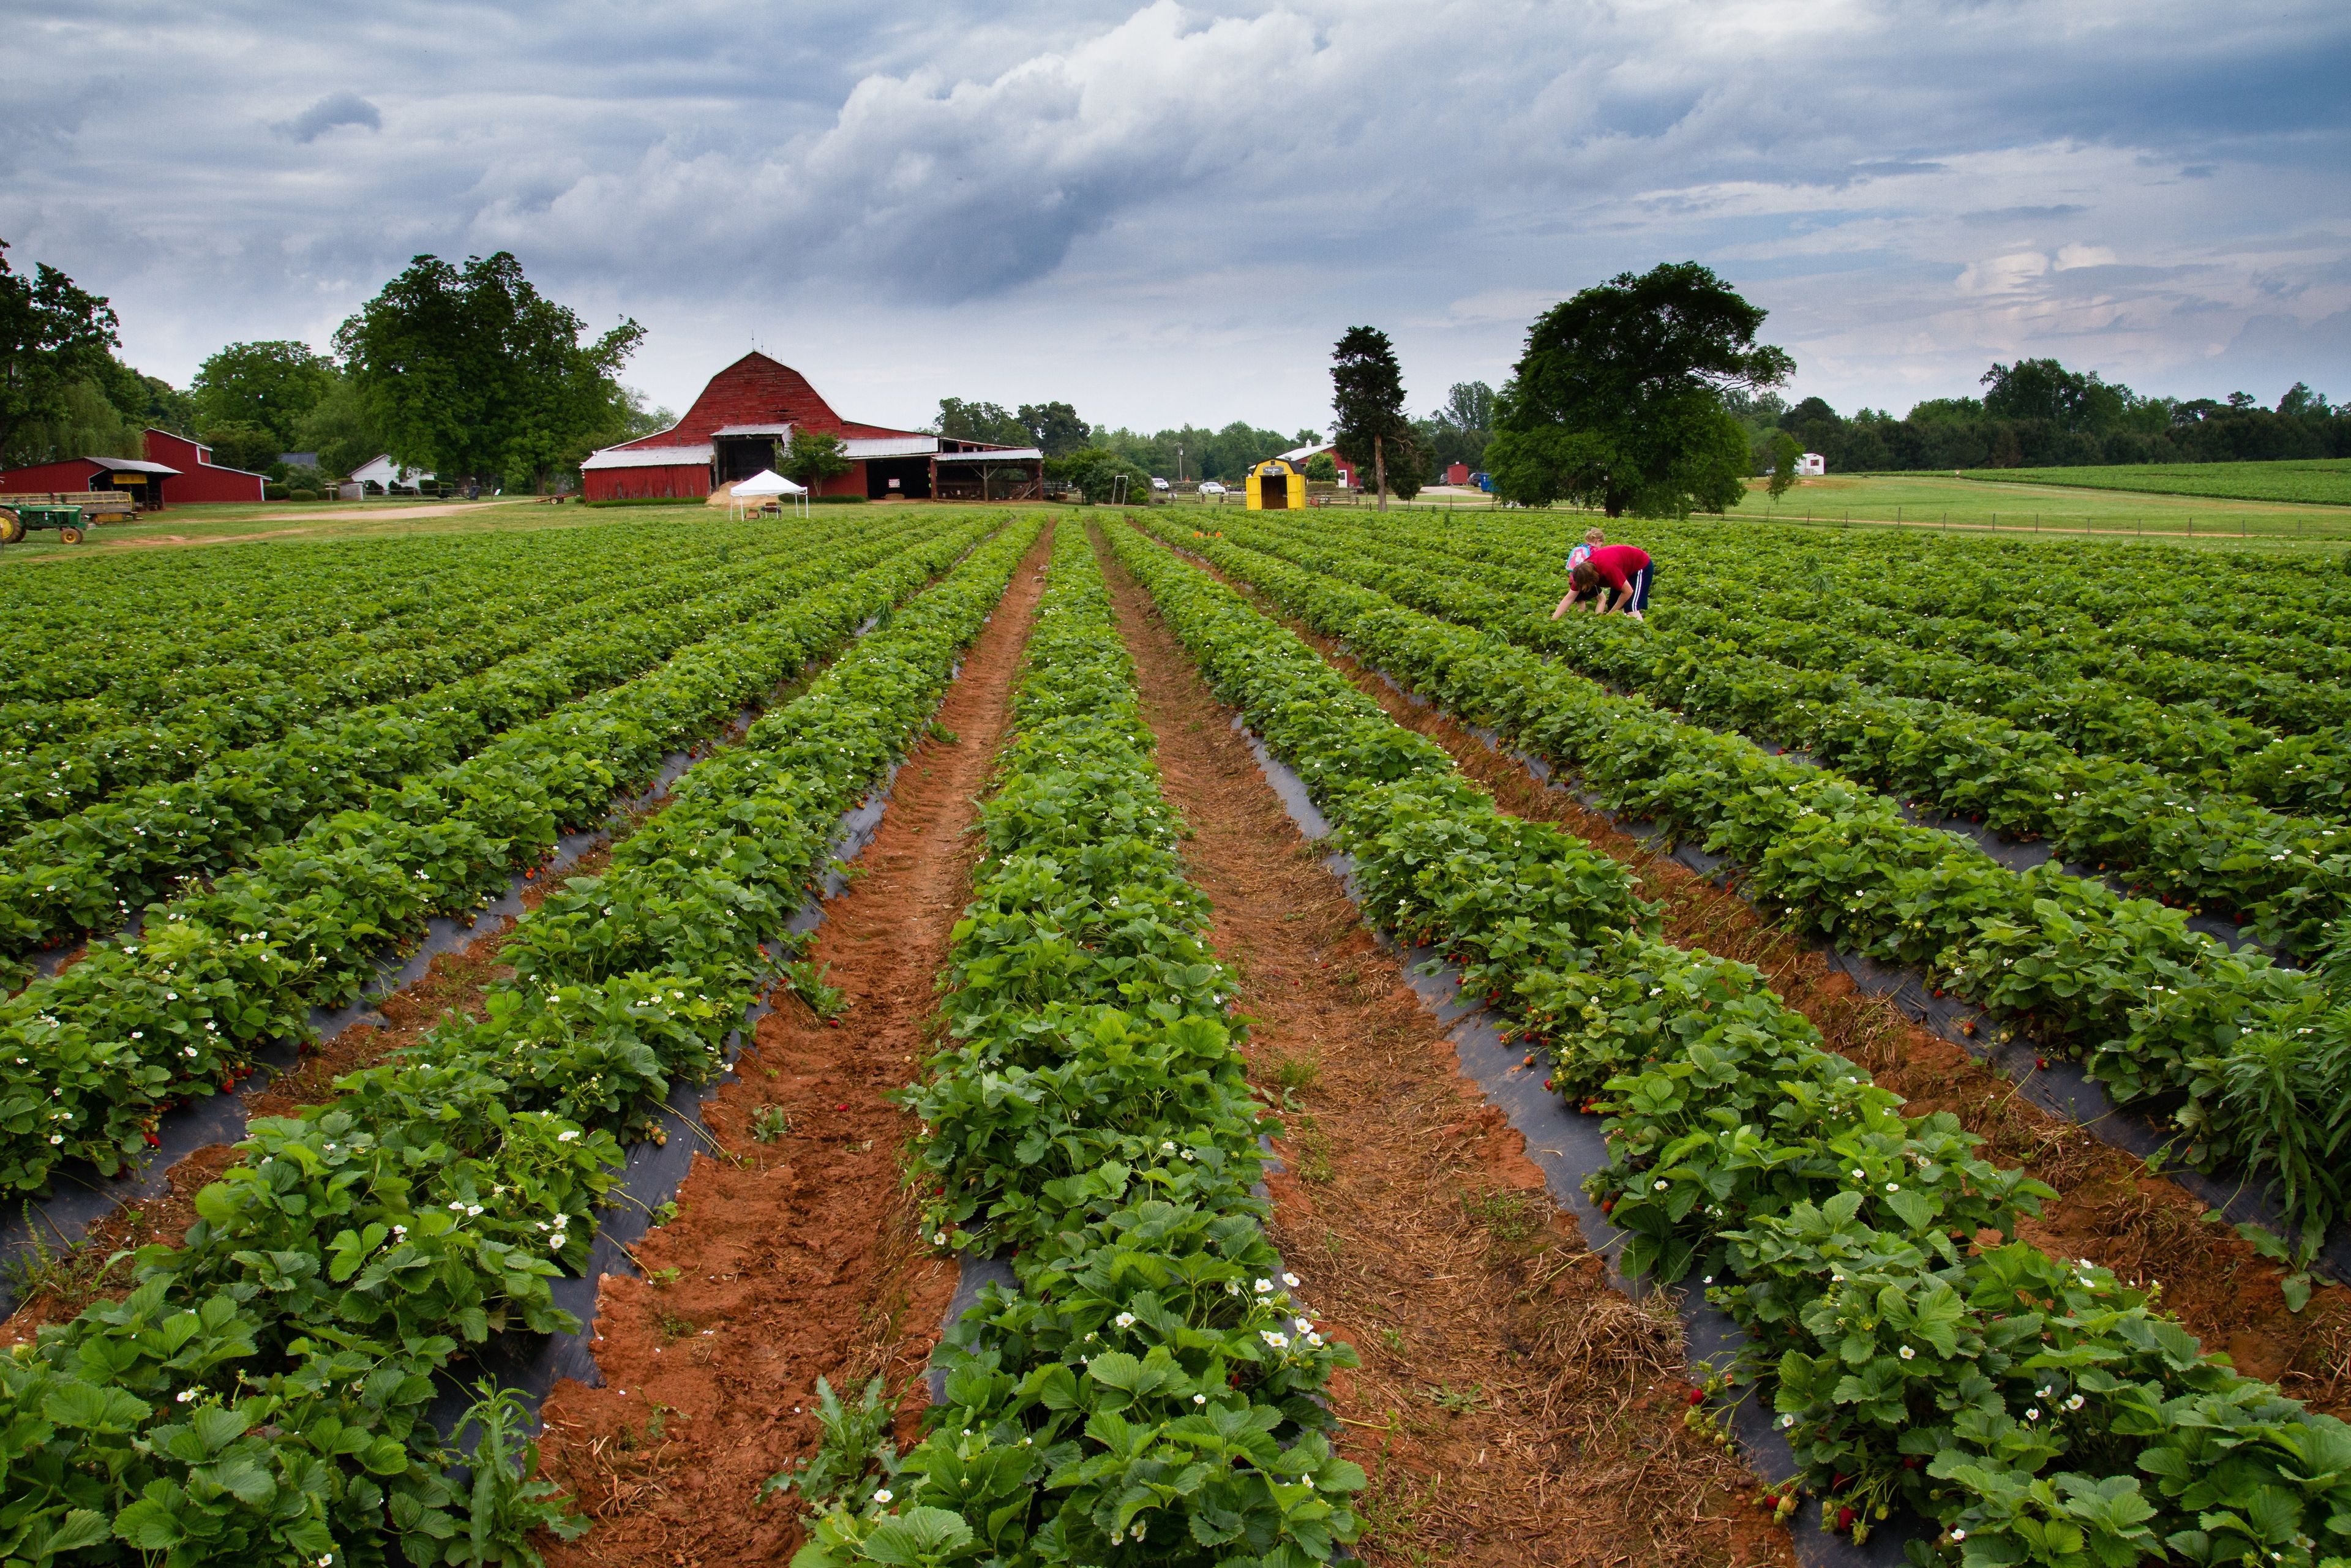 Farmers picking strawberries in a field.